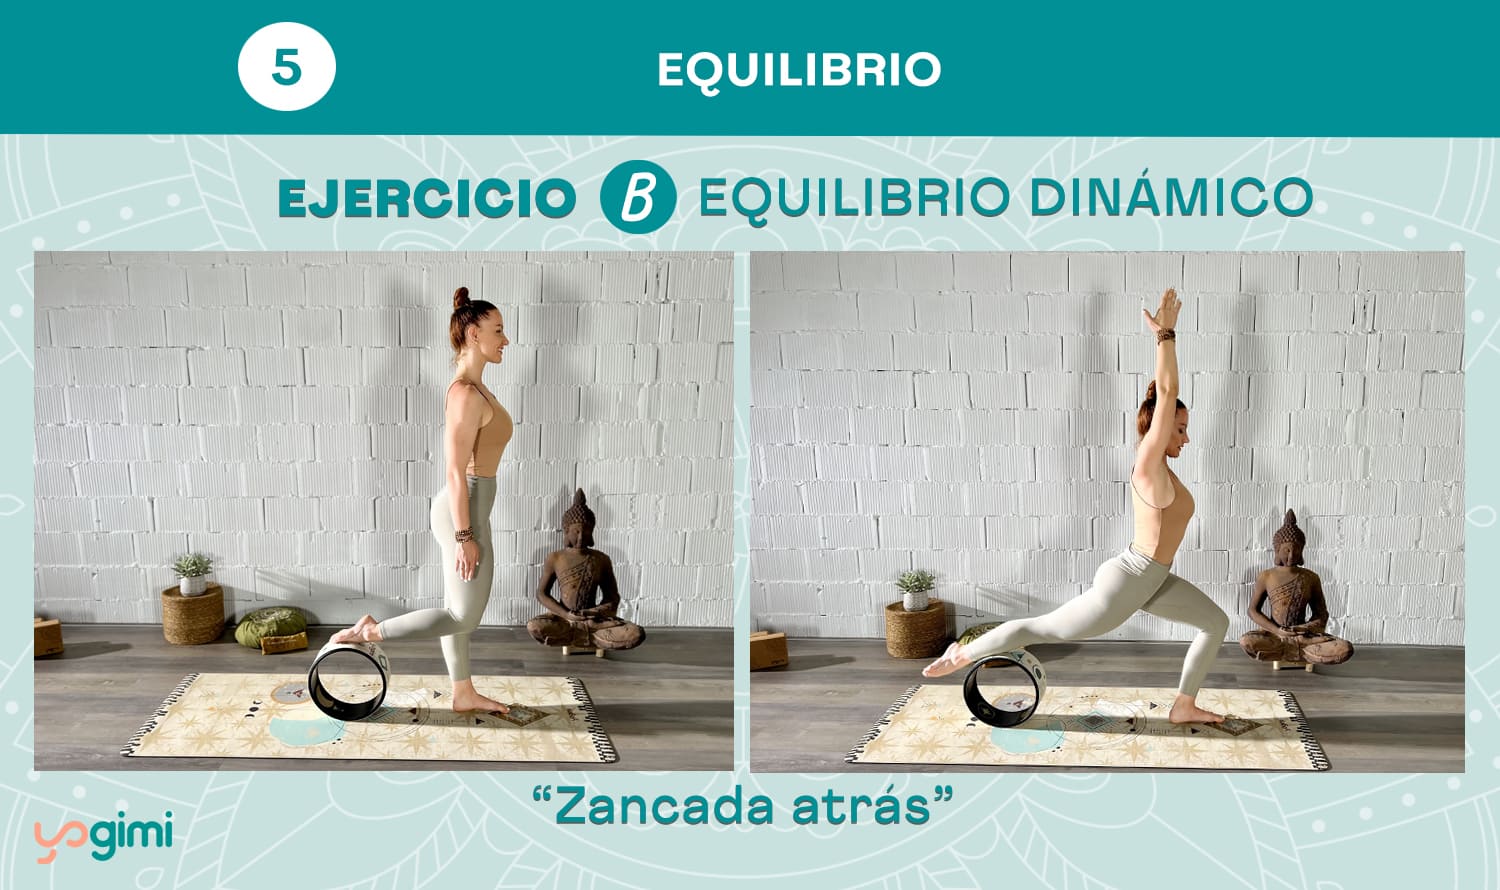 Aro Rueda Wheel Yoga Pilates Aerobic Fitness Estiramiento